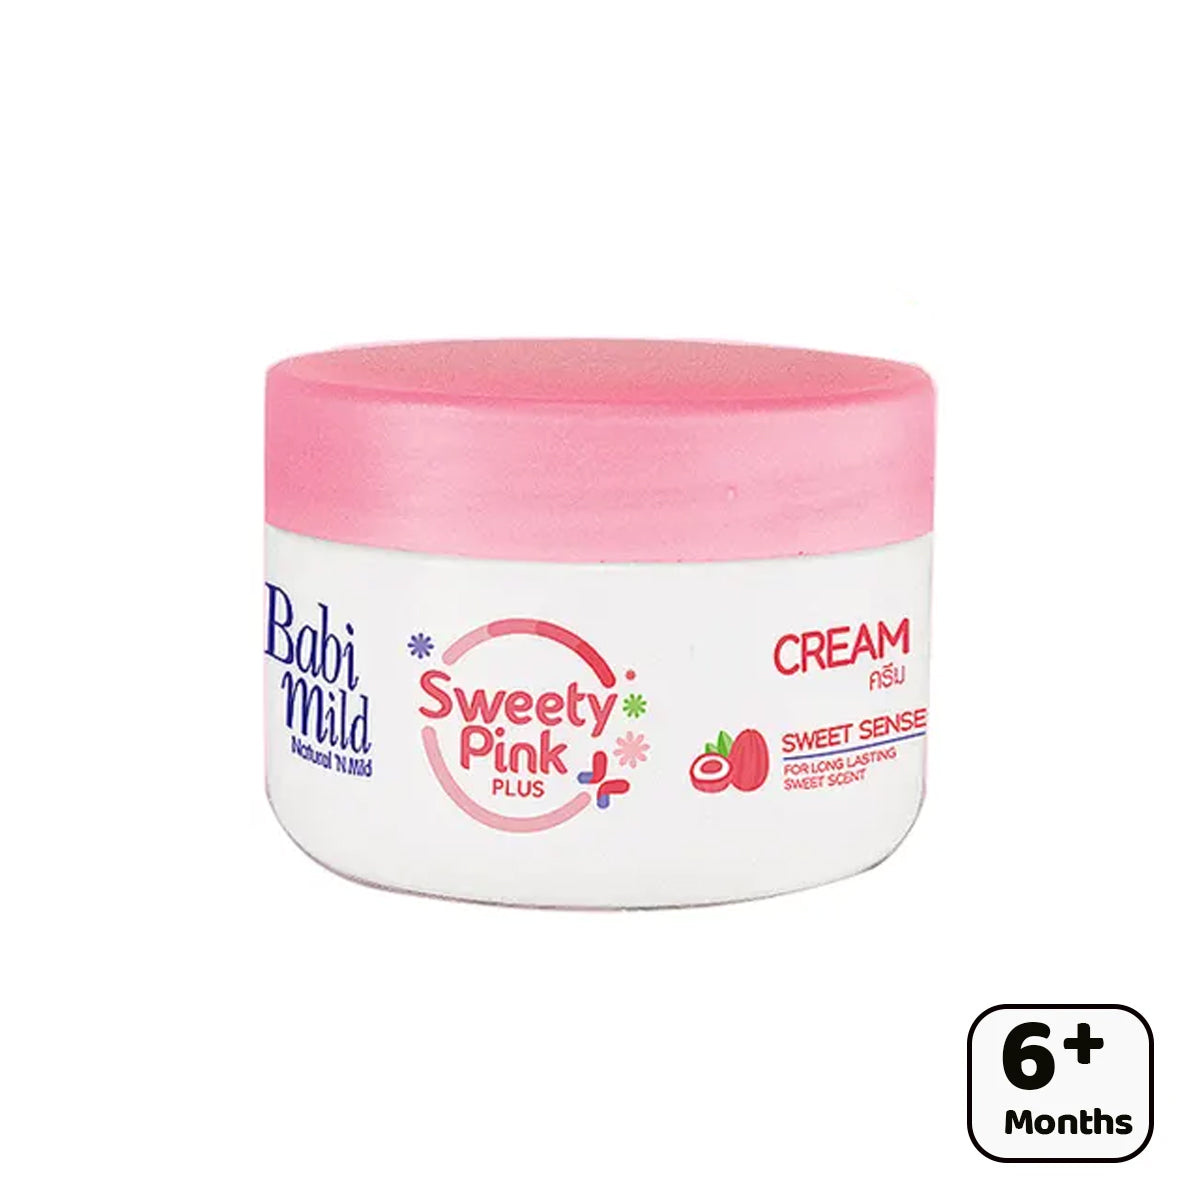 Babi Mild - Sweety Pink Baby Cream (50g)